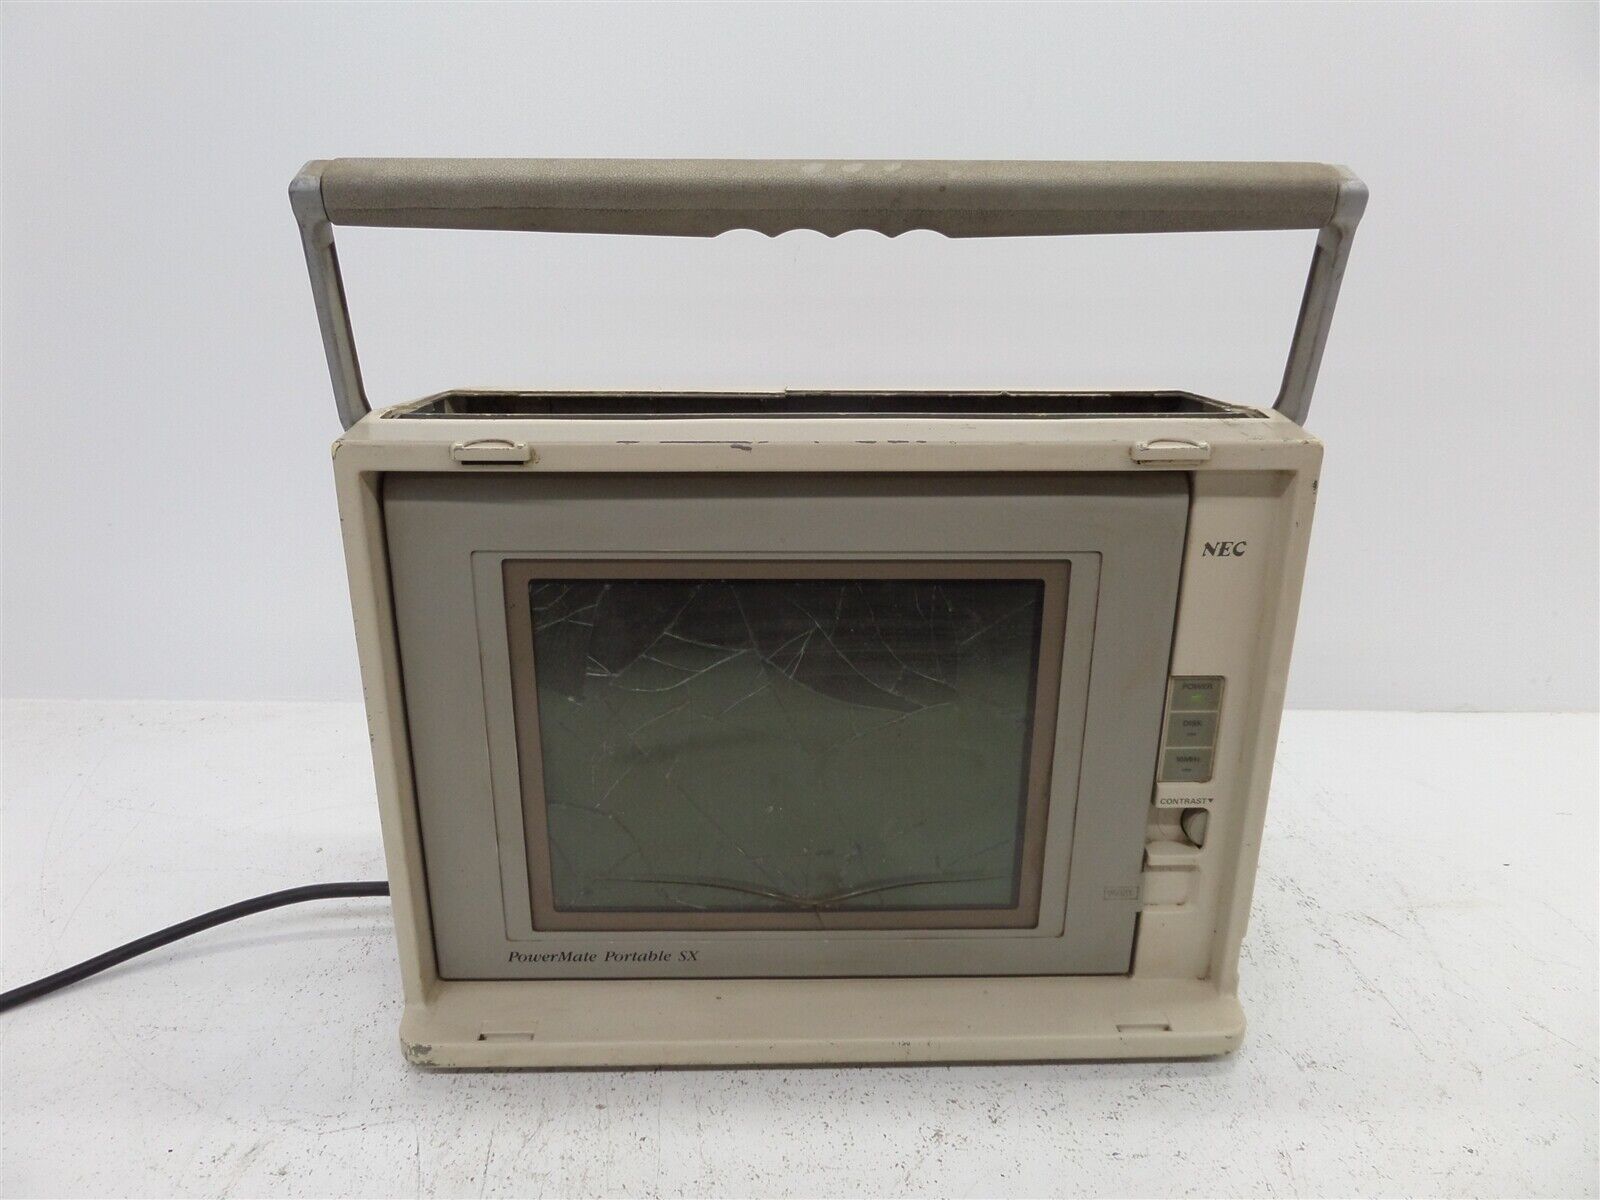 Vintage NEC PowerMate Portable SX APC-H702XB Portable Computer